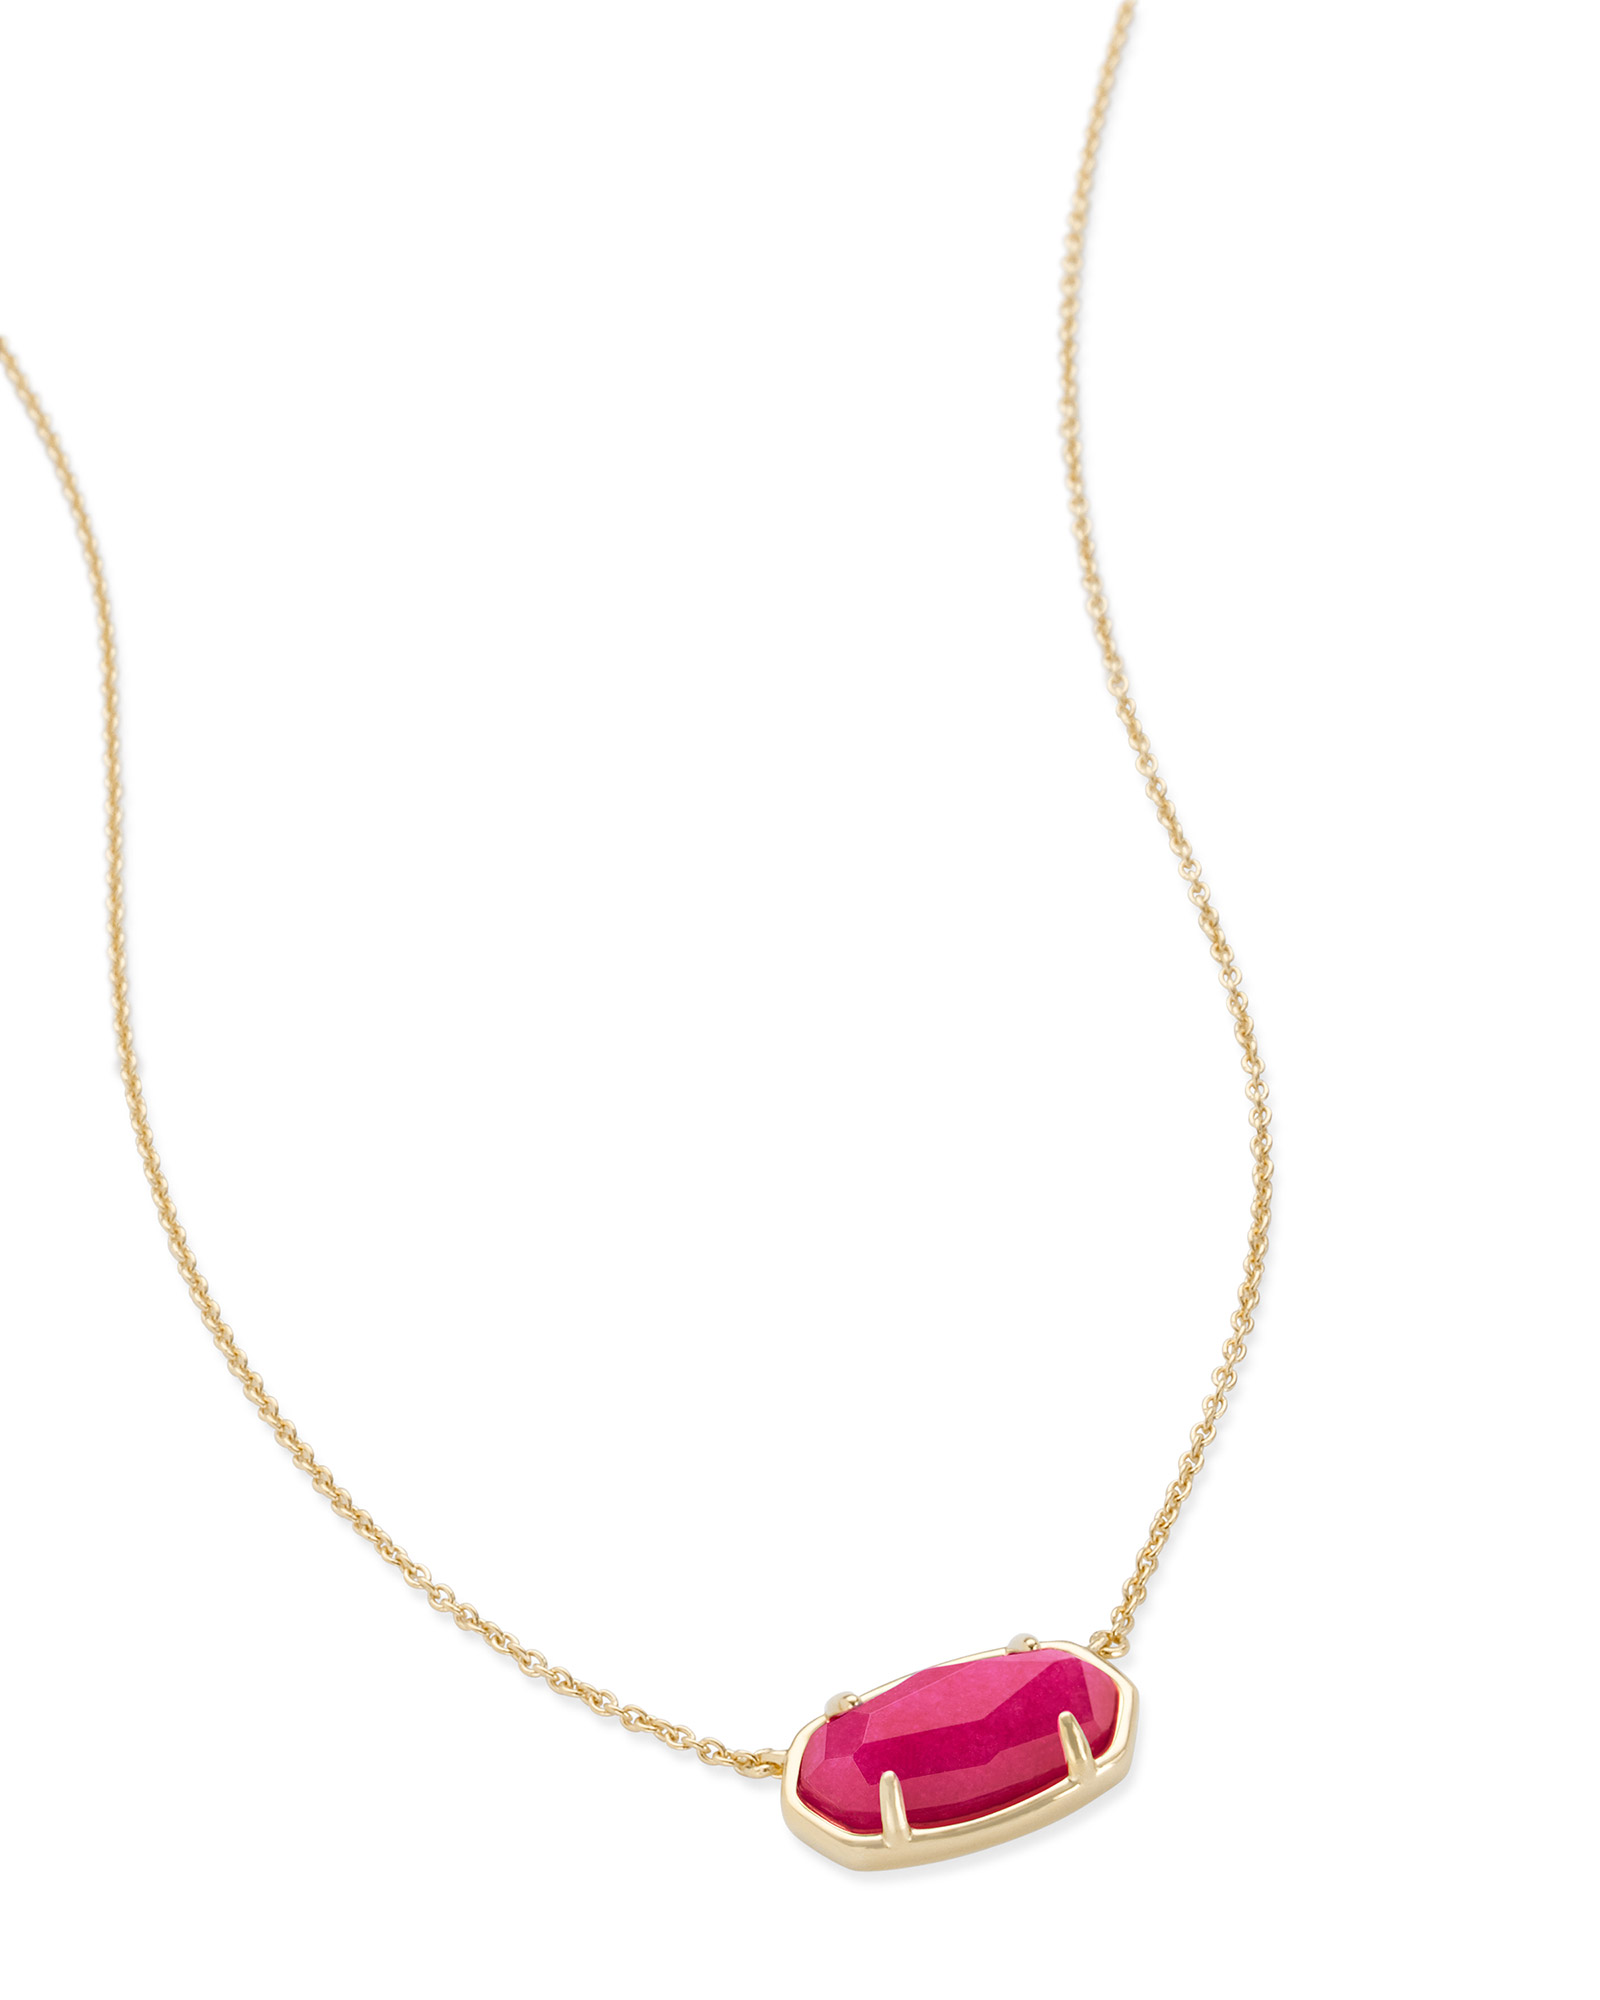 Elisa 18k Gold Vermeil Pendant Necklace in Pink Quartzite | Kendra Scott